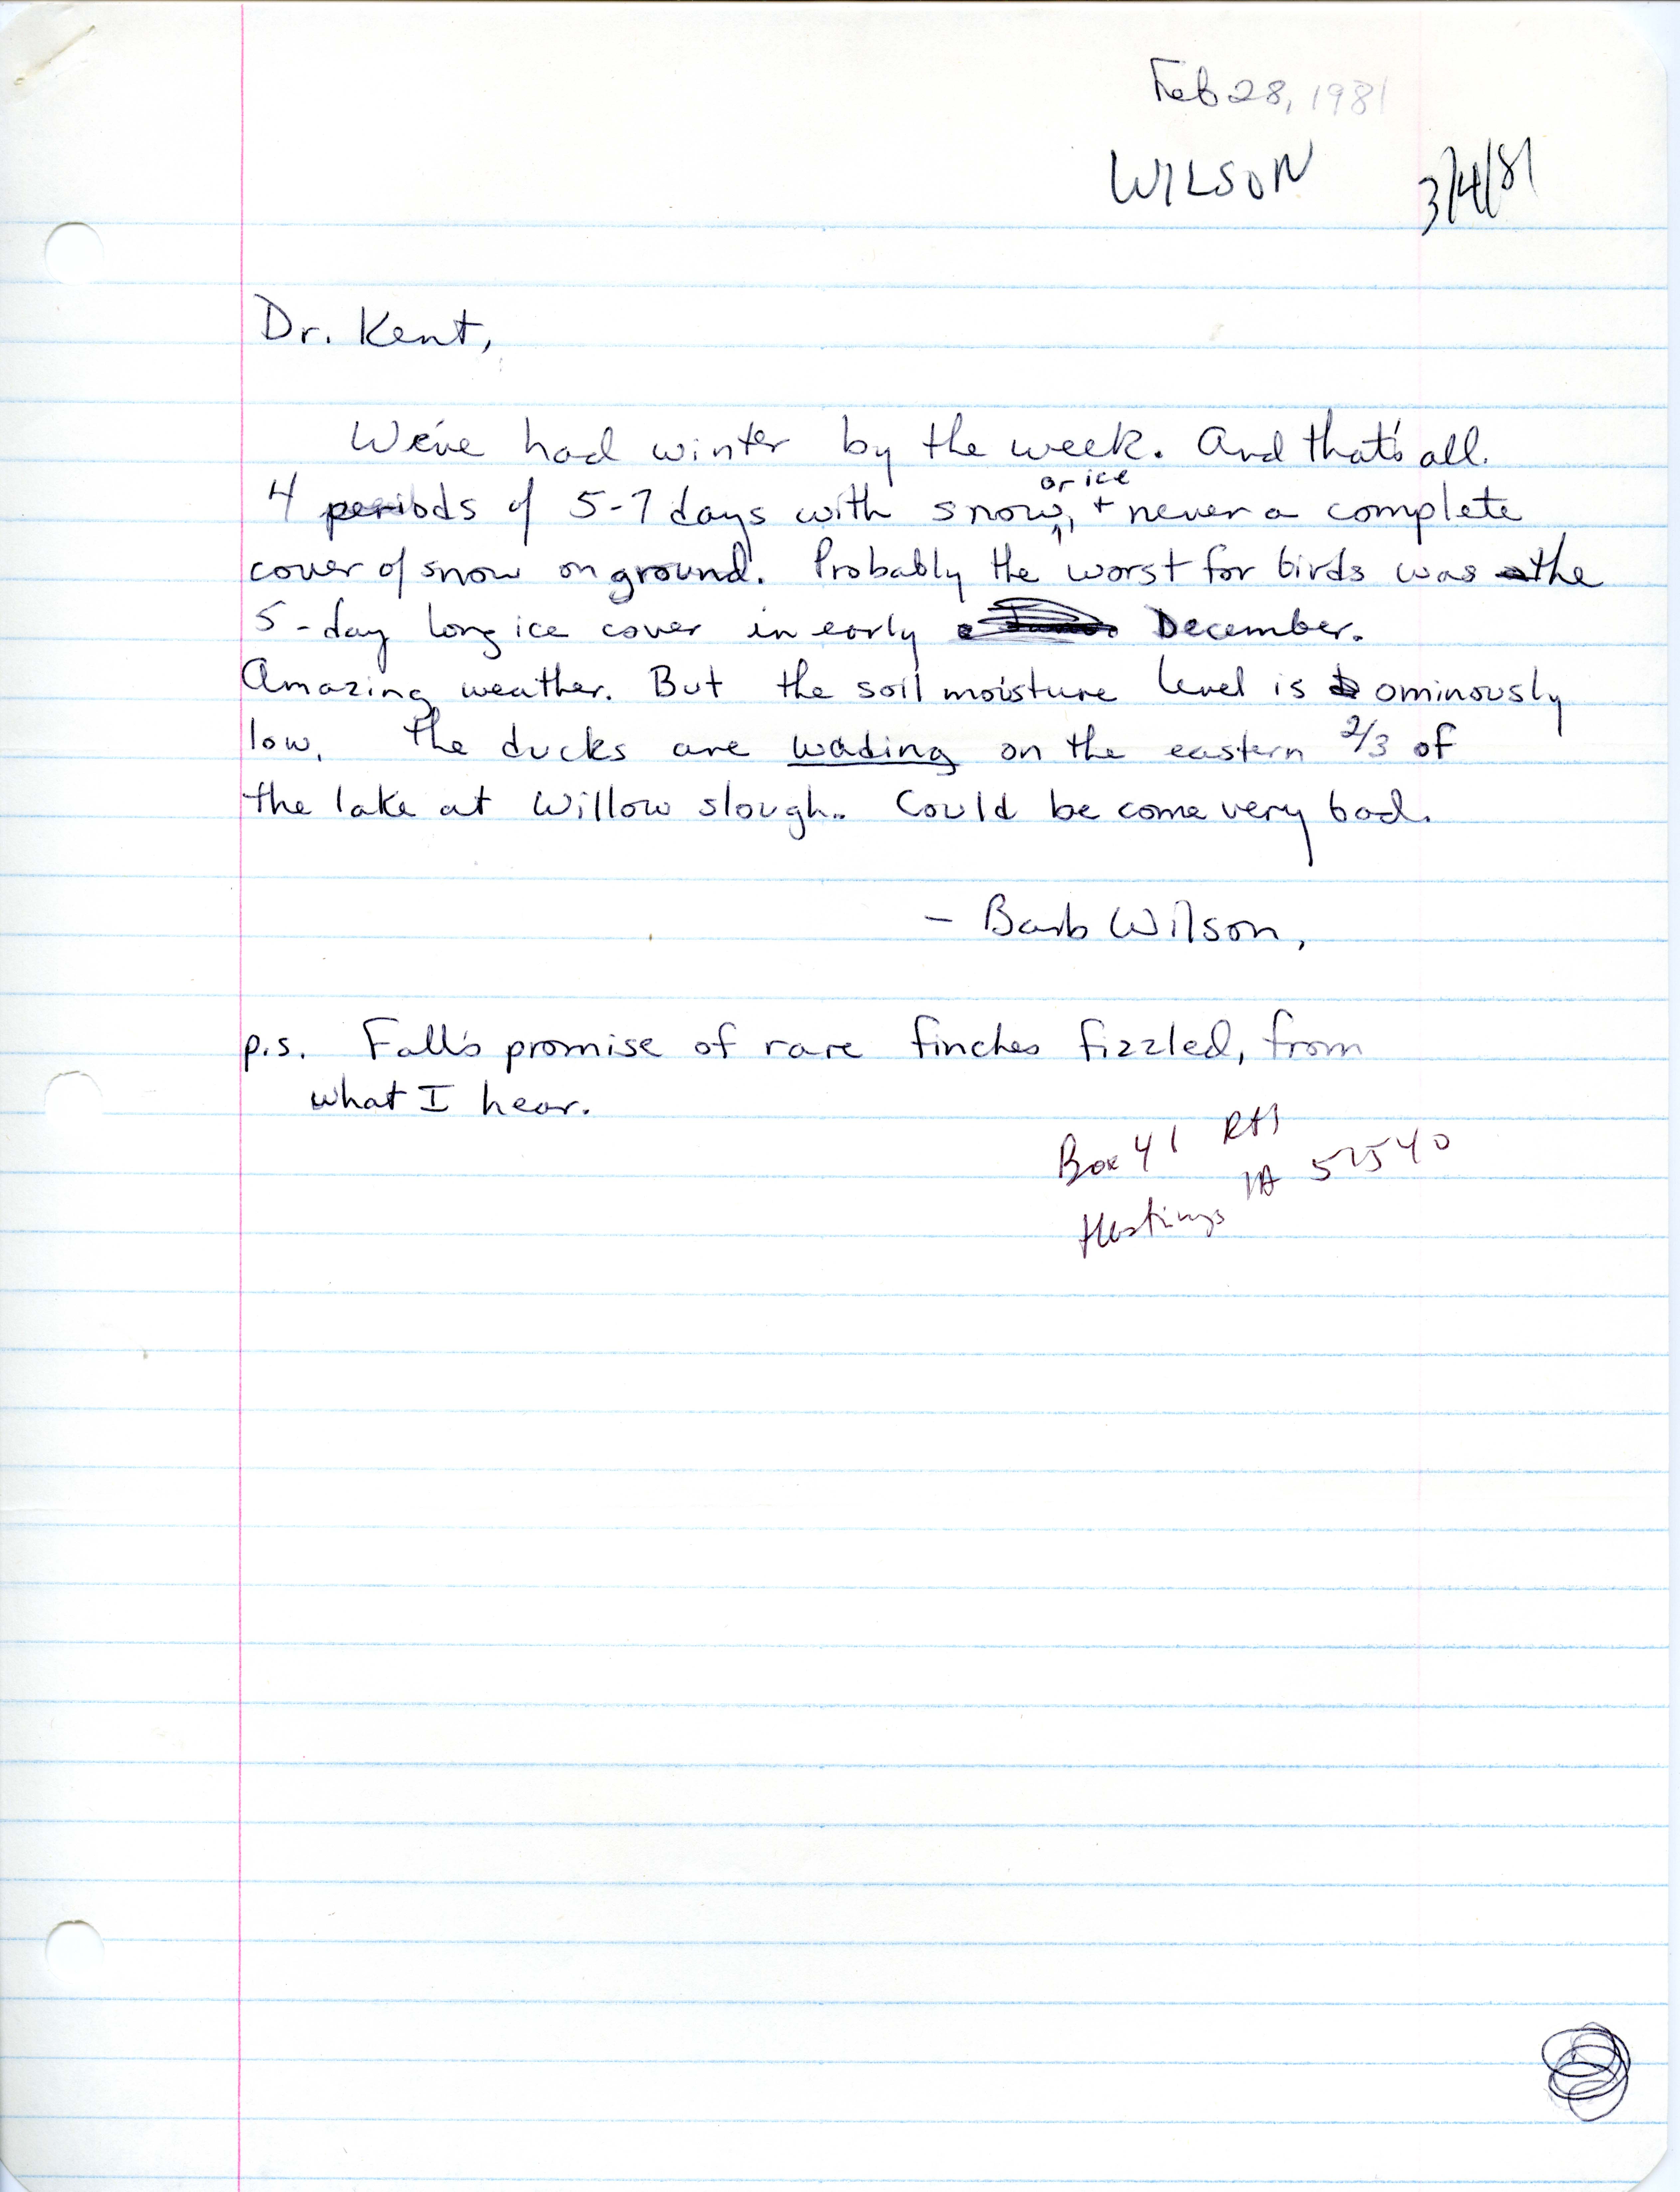 Barb Wilson letter to Thomas Kent regarding Winter birds sighted, February 28, 1981